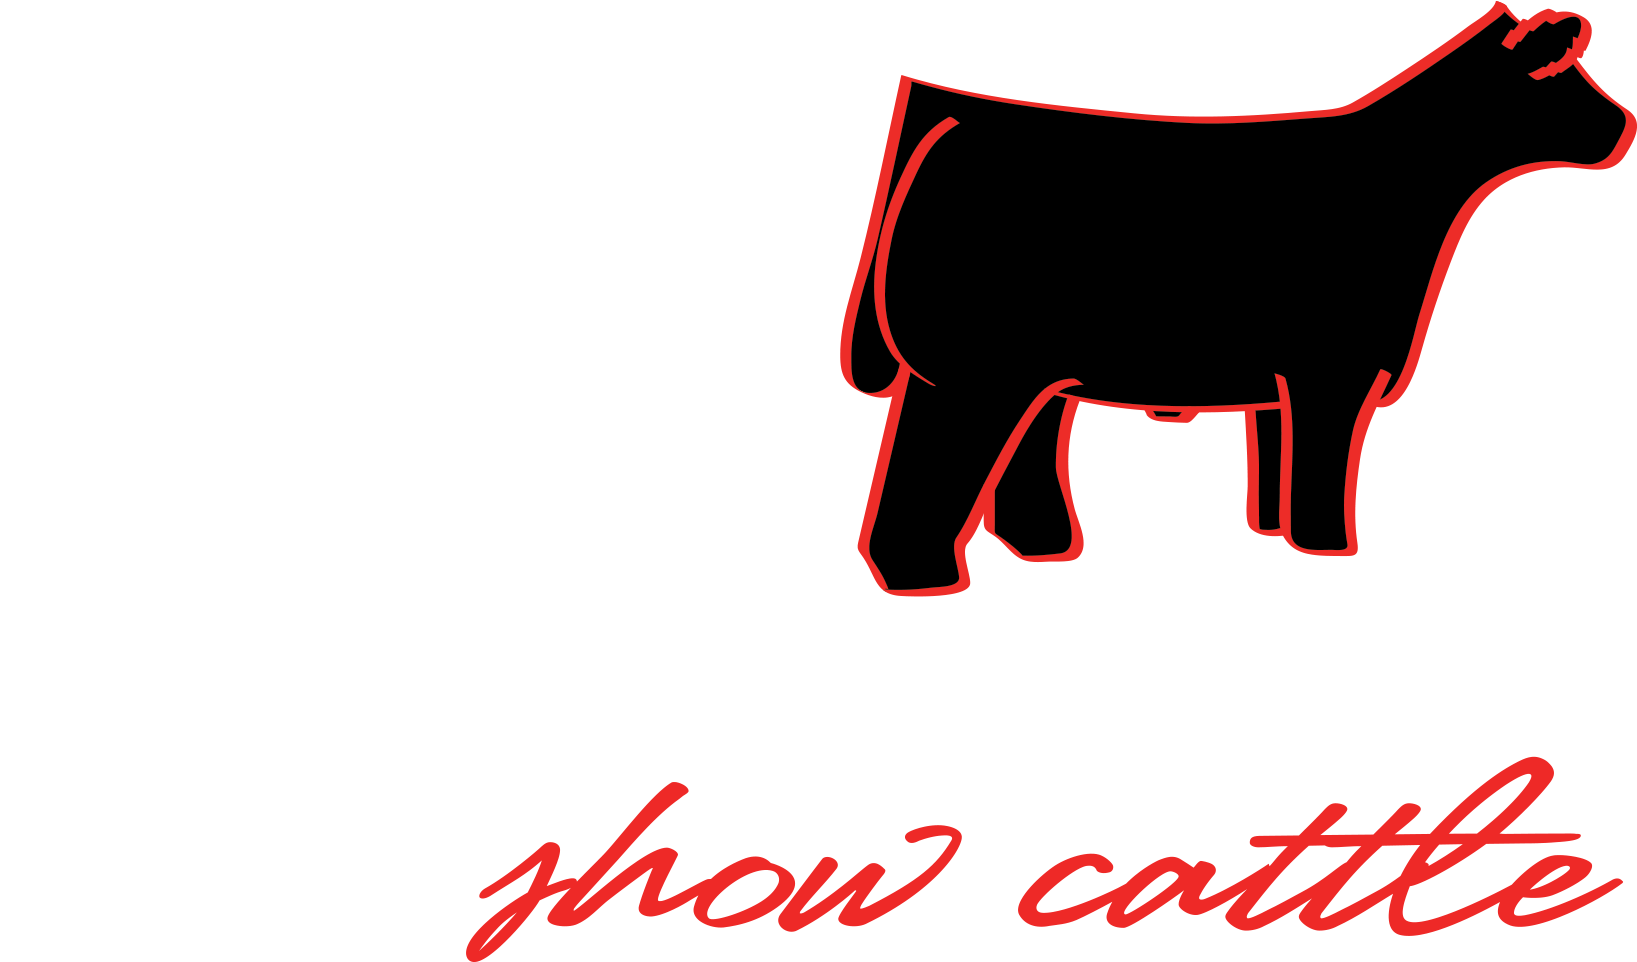 Show Cattle Logo Clipart - Show Cattle Logo (1744x1028)